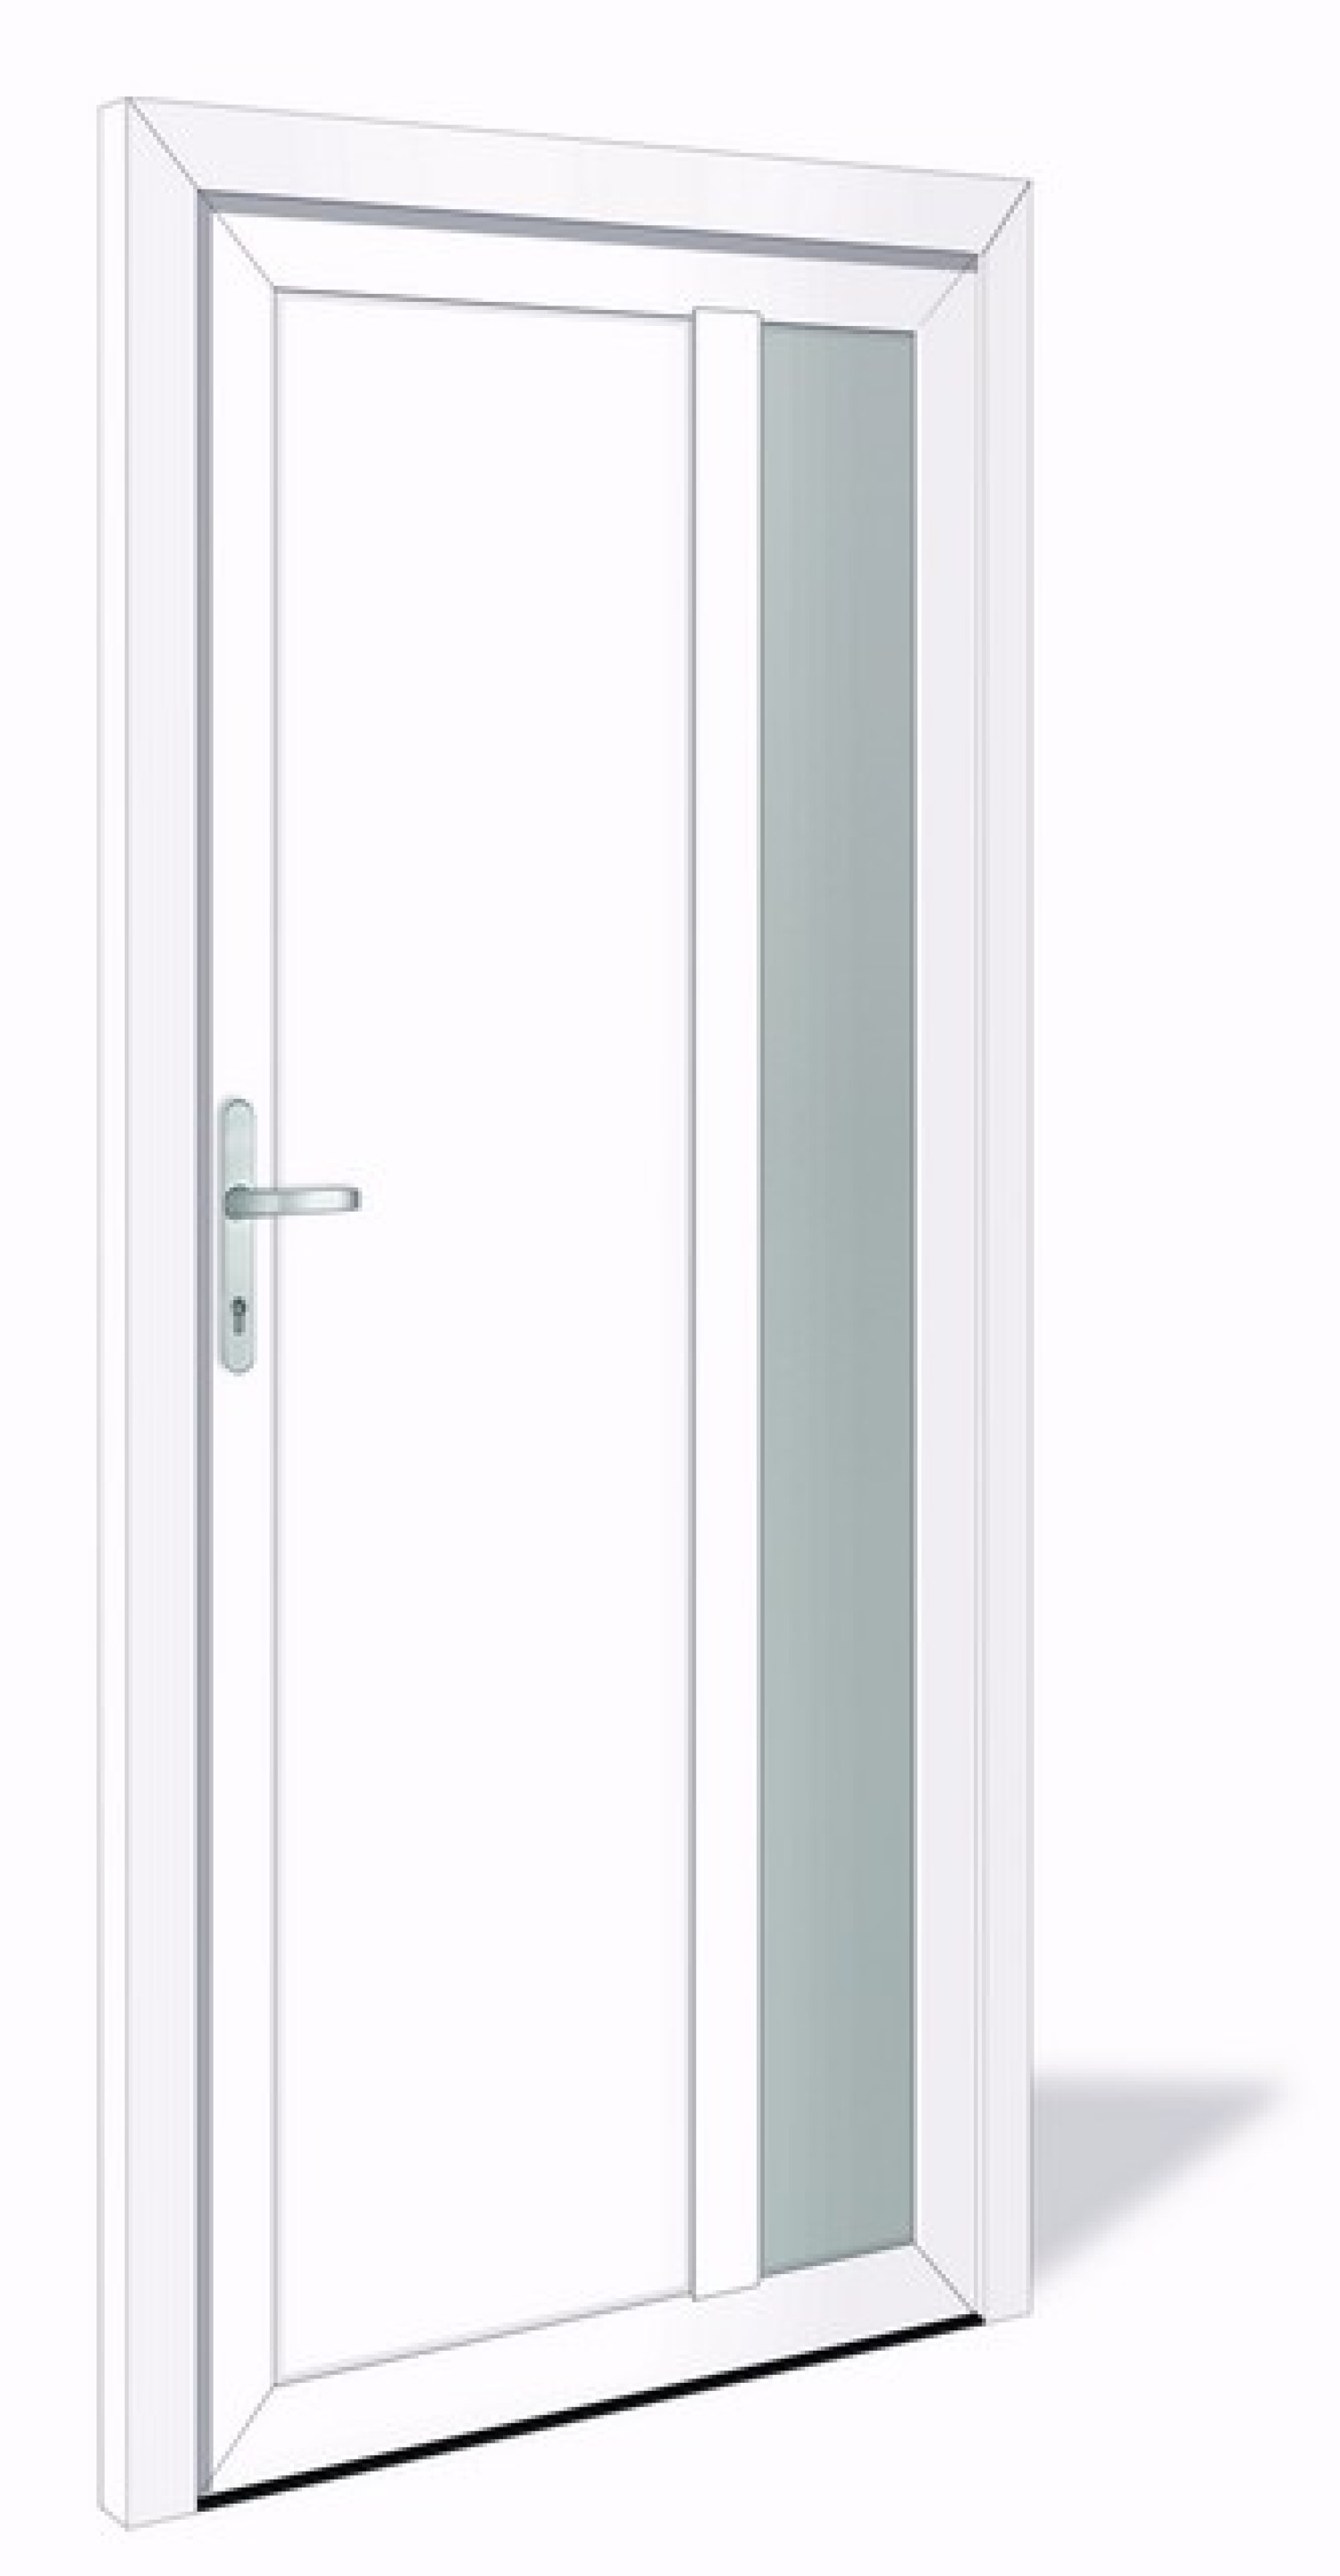 NET 1053 Aluminium Nebeneingangstür mit Glasausschnitt - Interio